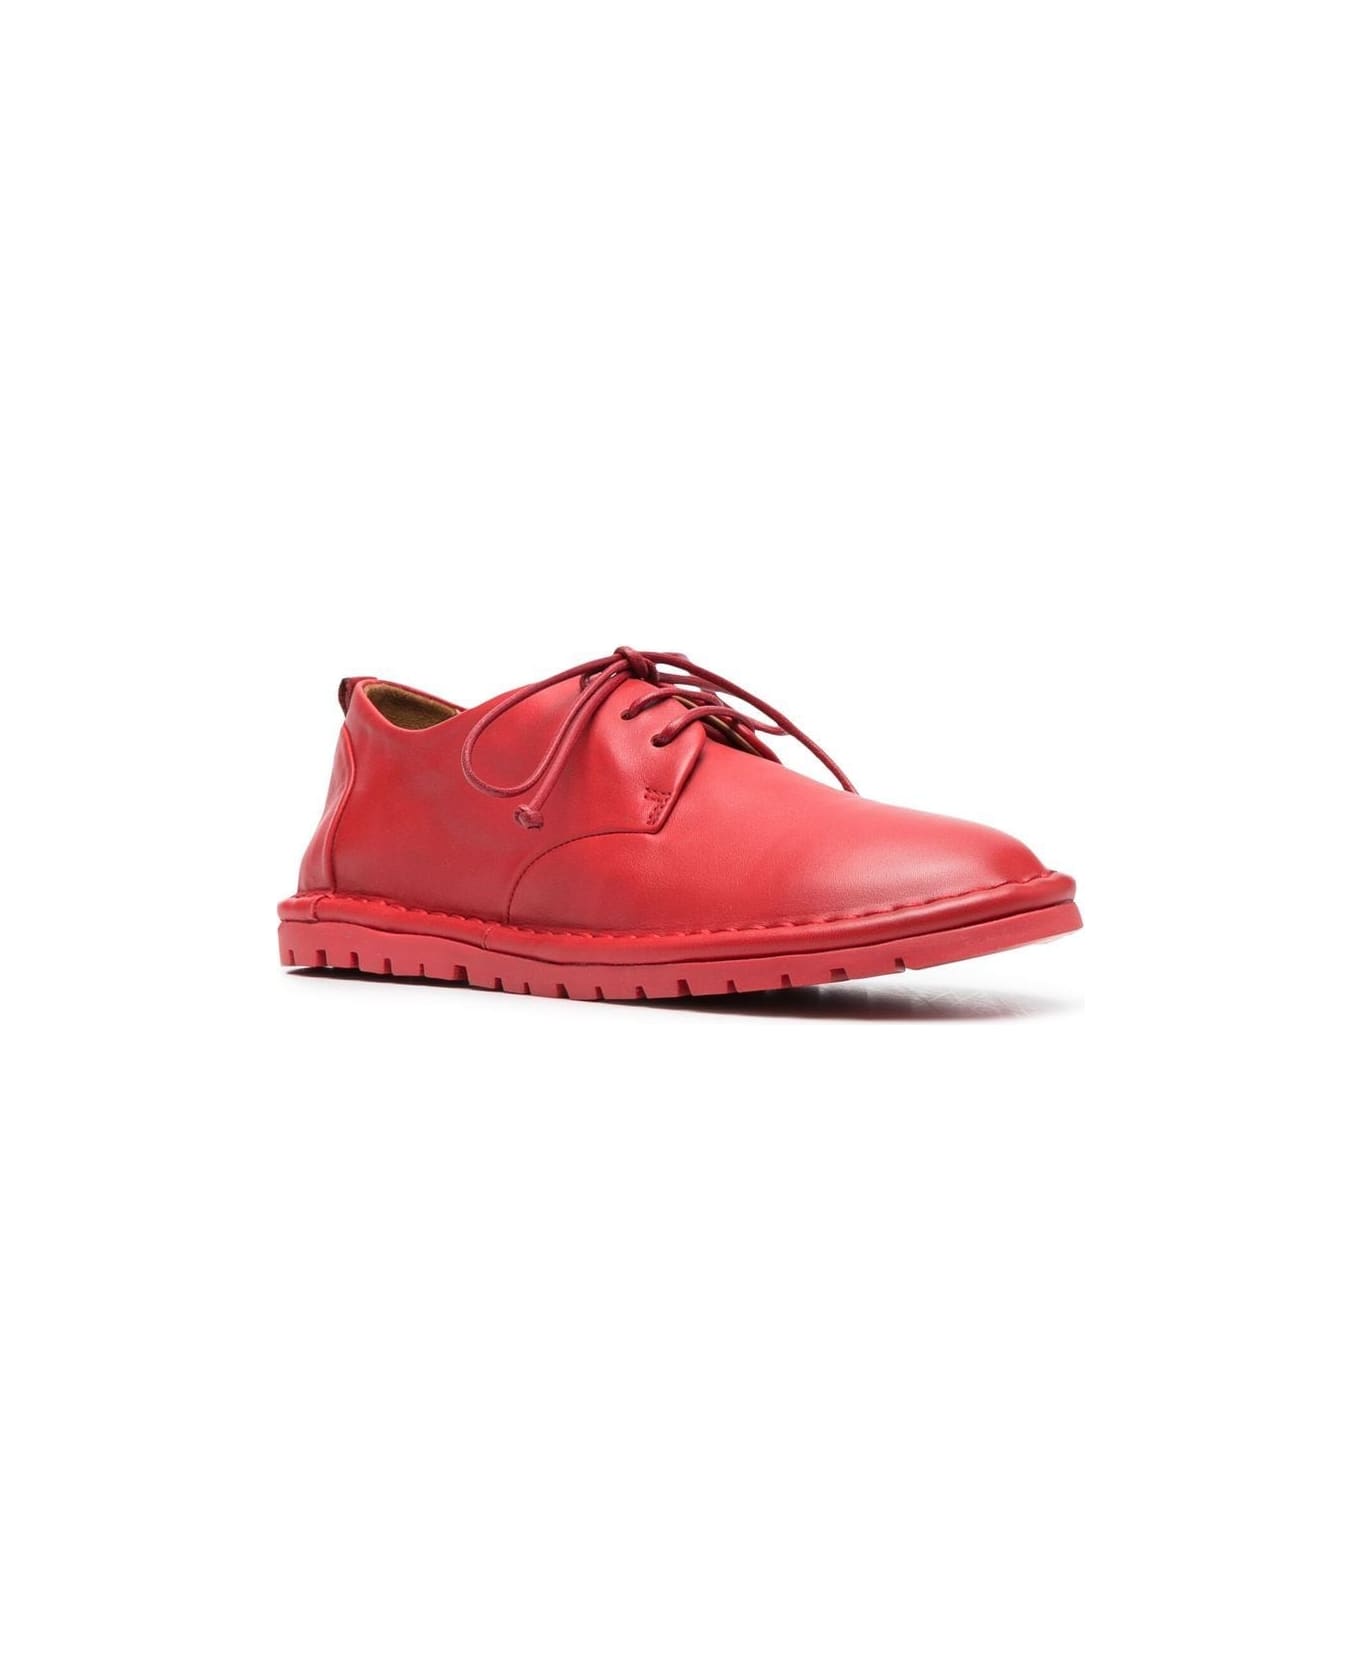 Marsell Sancrispa Derby Shoes - Red フラットシューズ